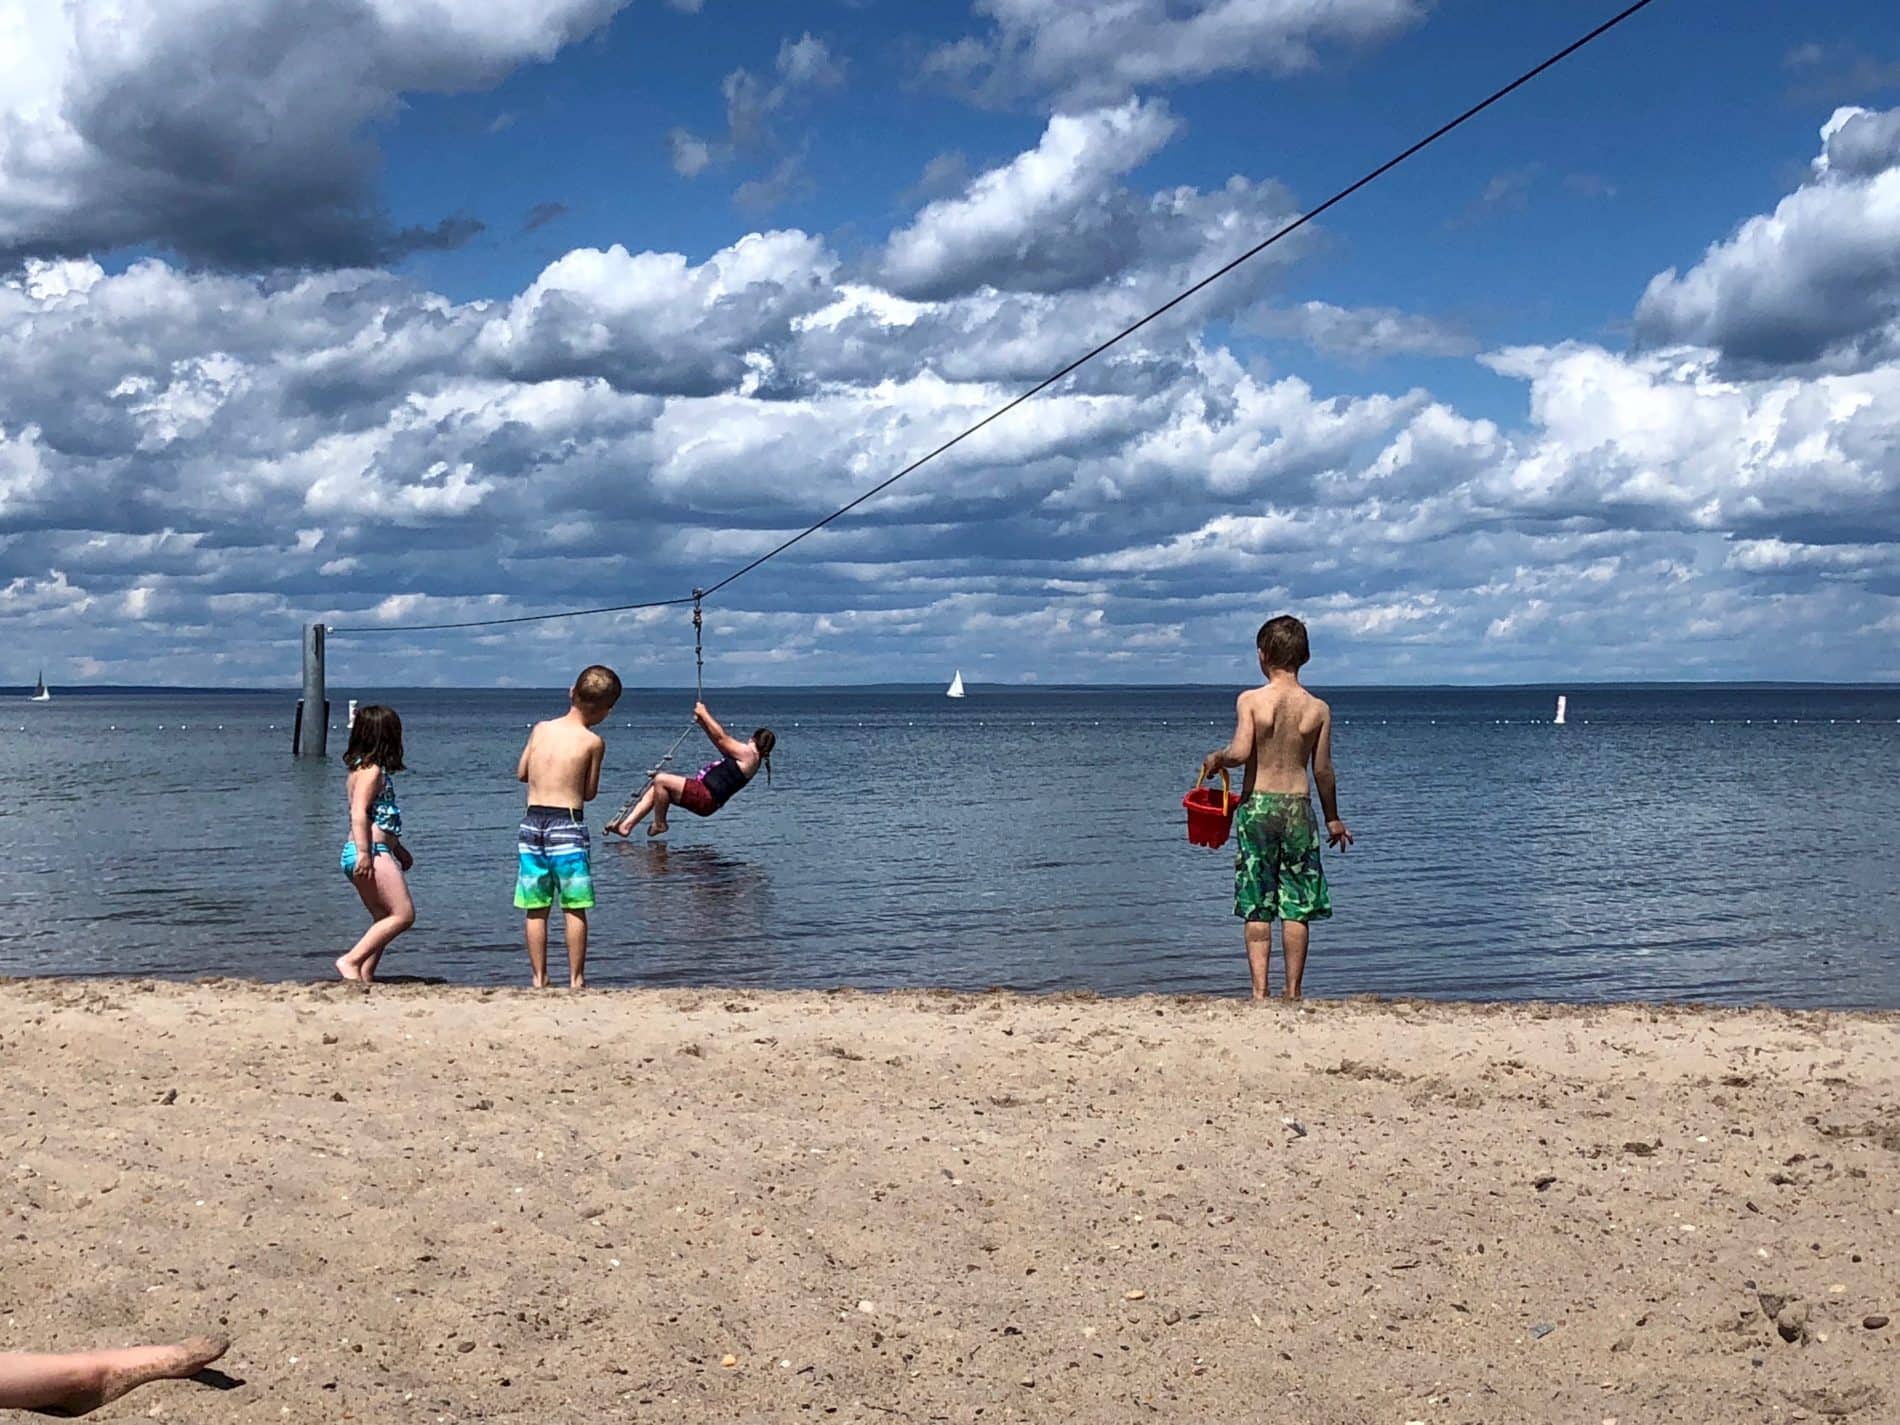 Group of children at beach zipline into water